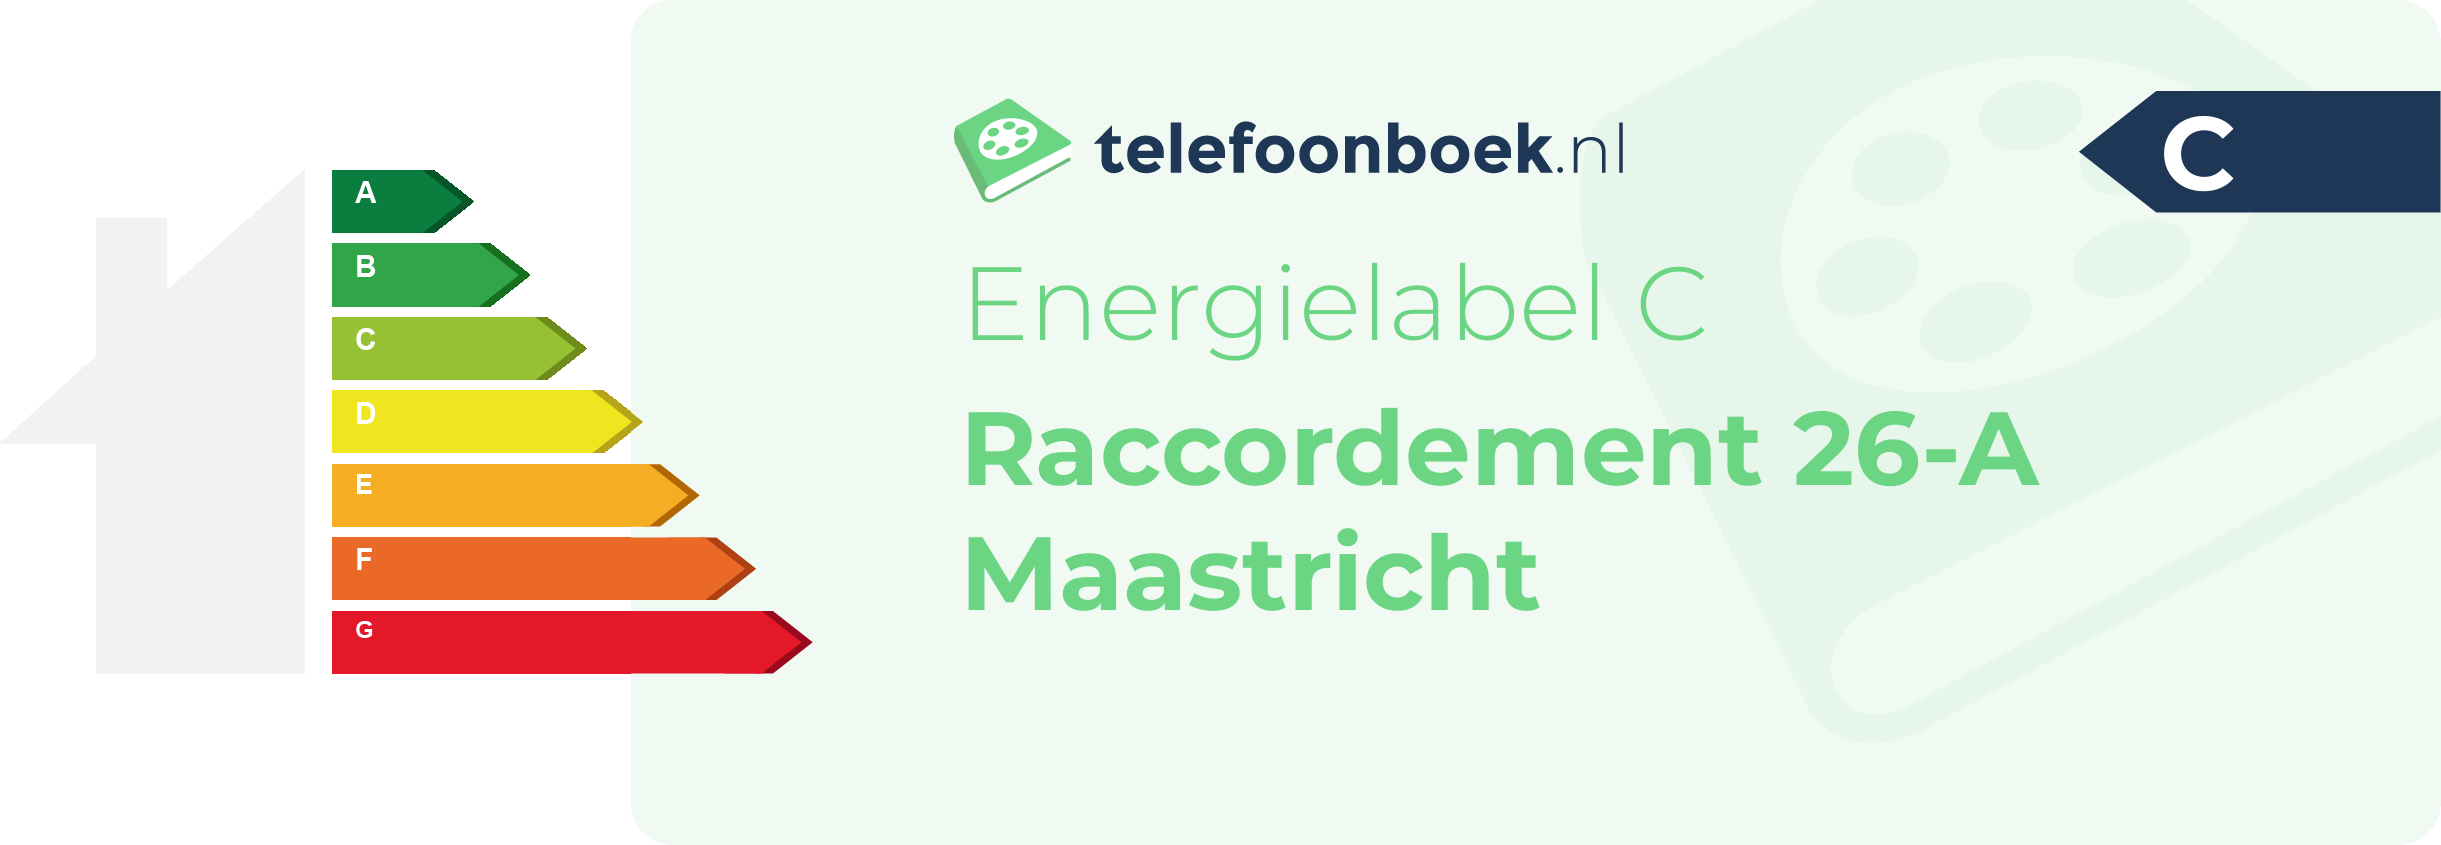 Energielabel Raccordement 26-A Maastricht